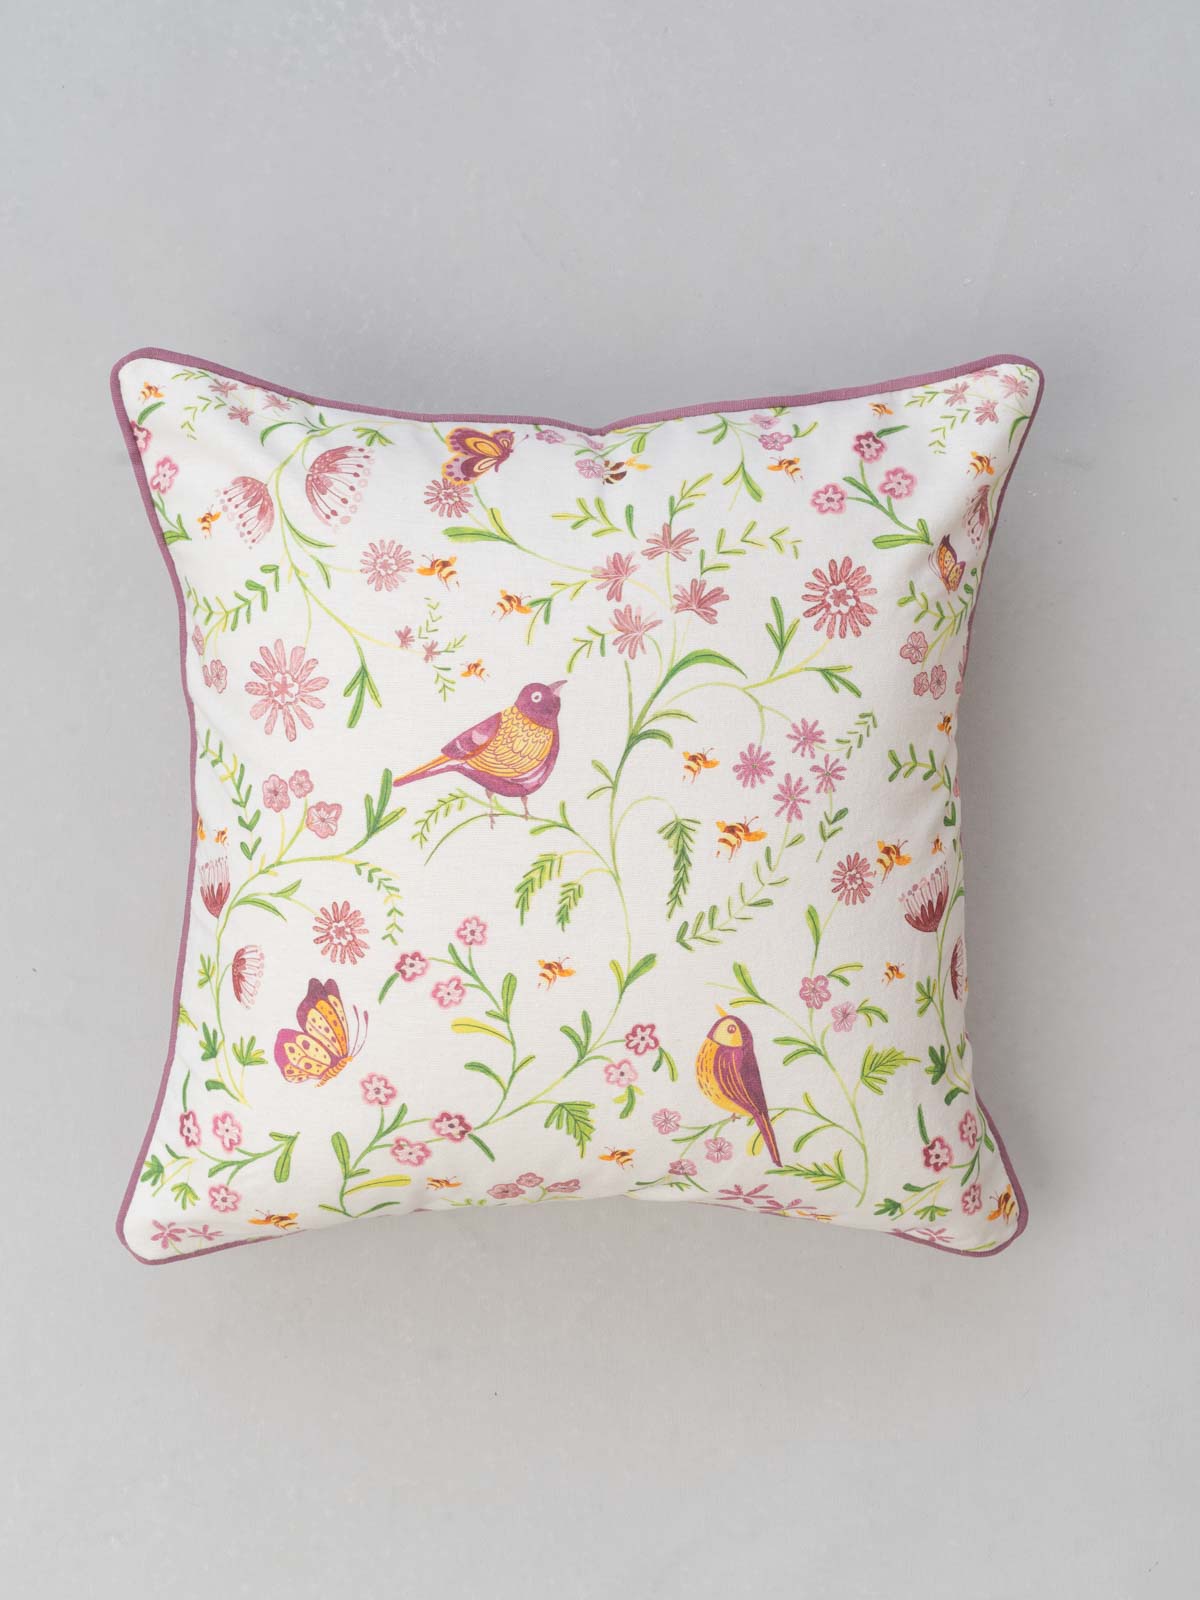 Whimsical Garden Printed Cotton Cushion Cover - Multicolor